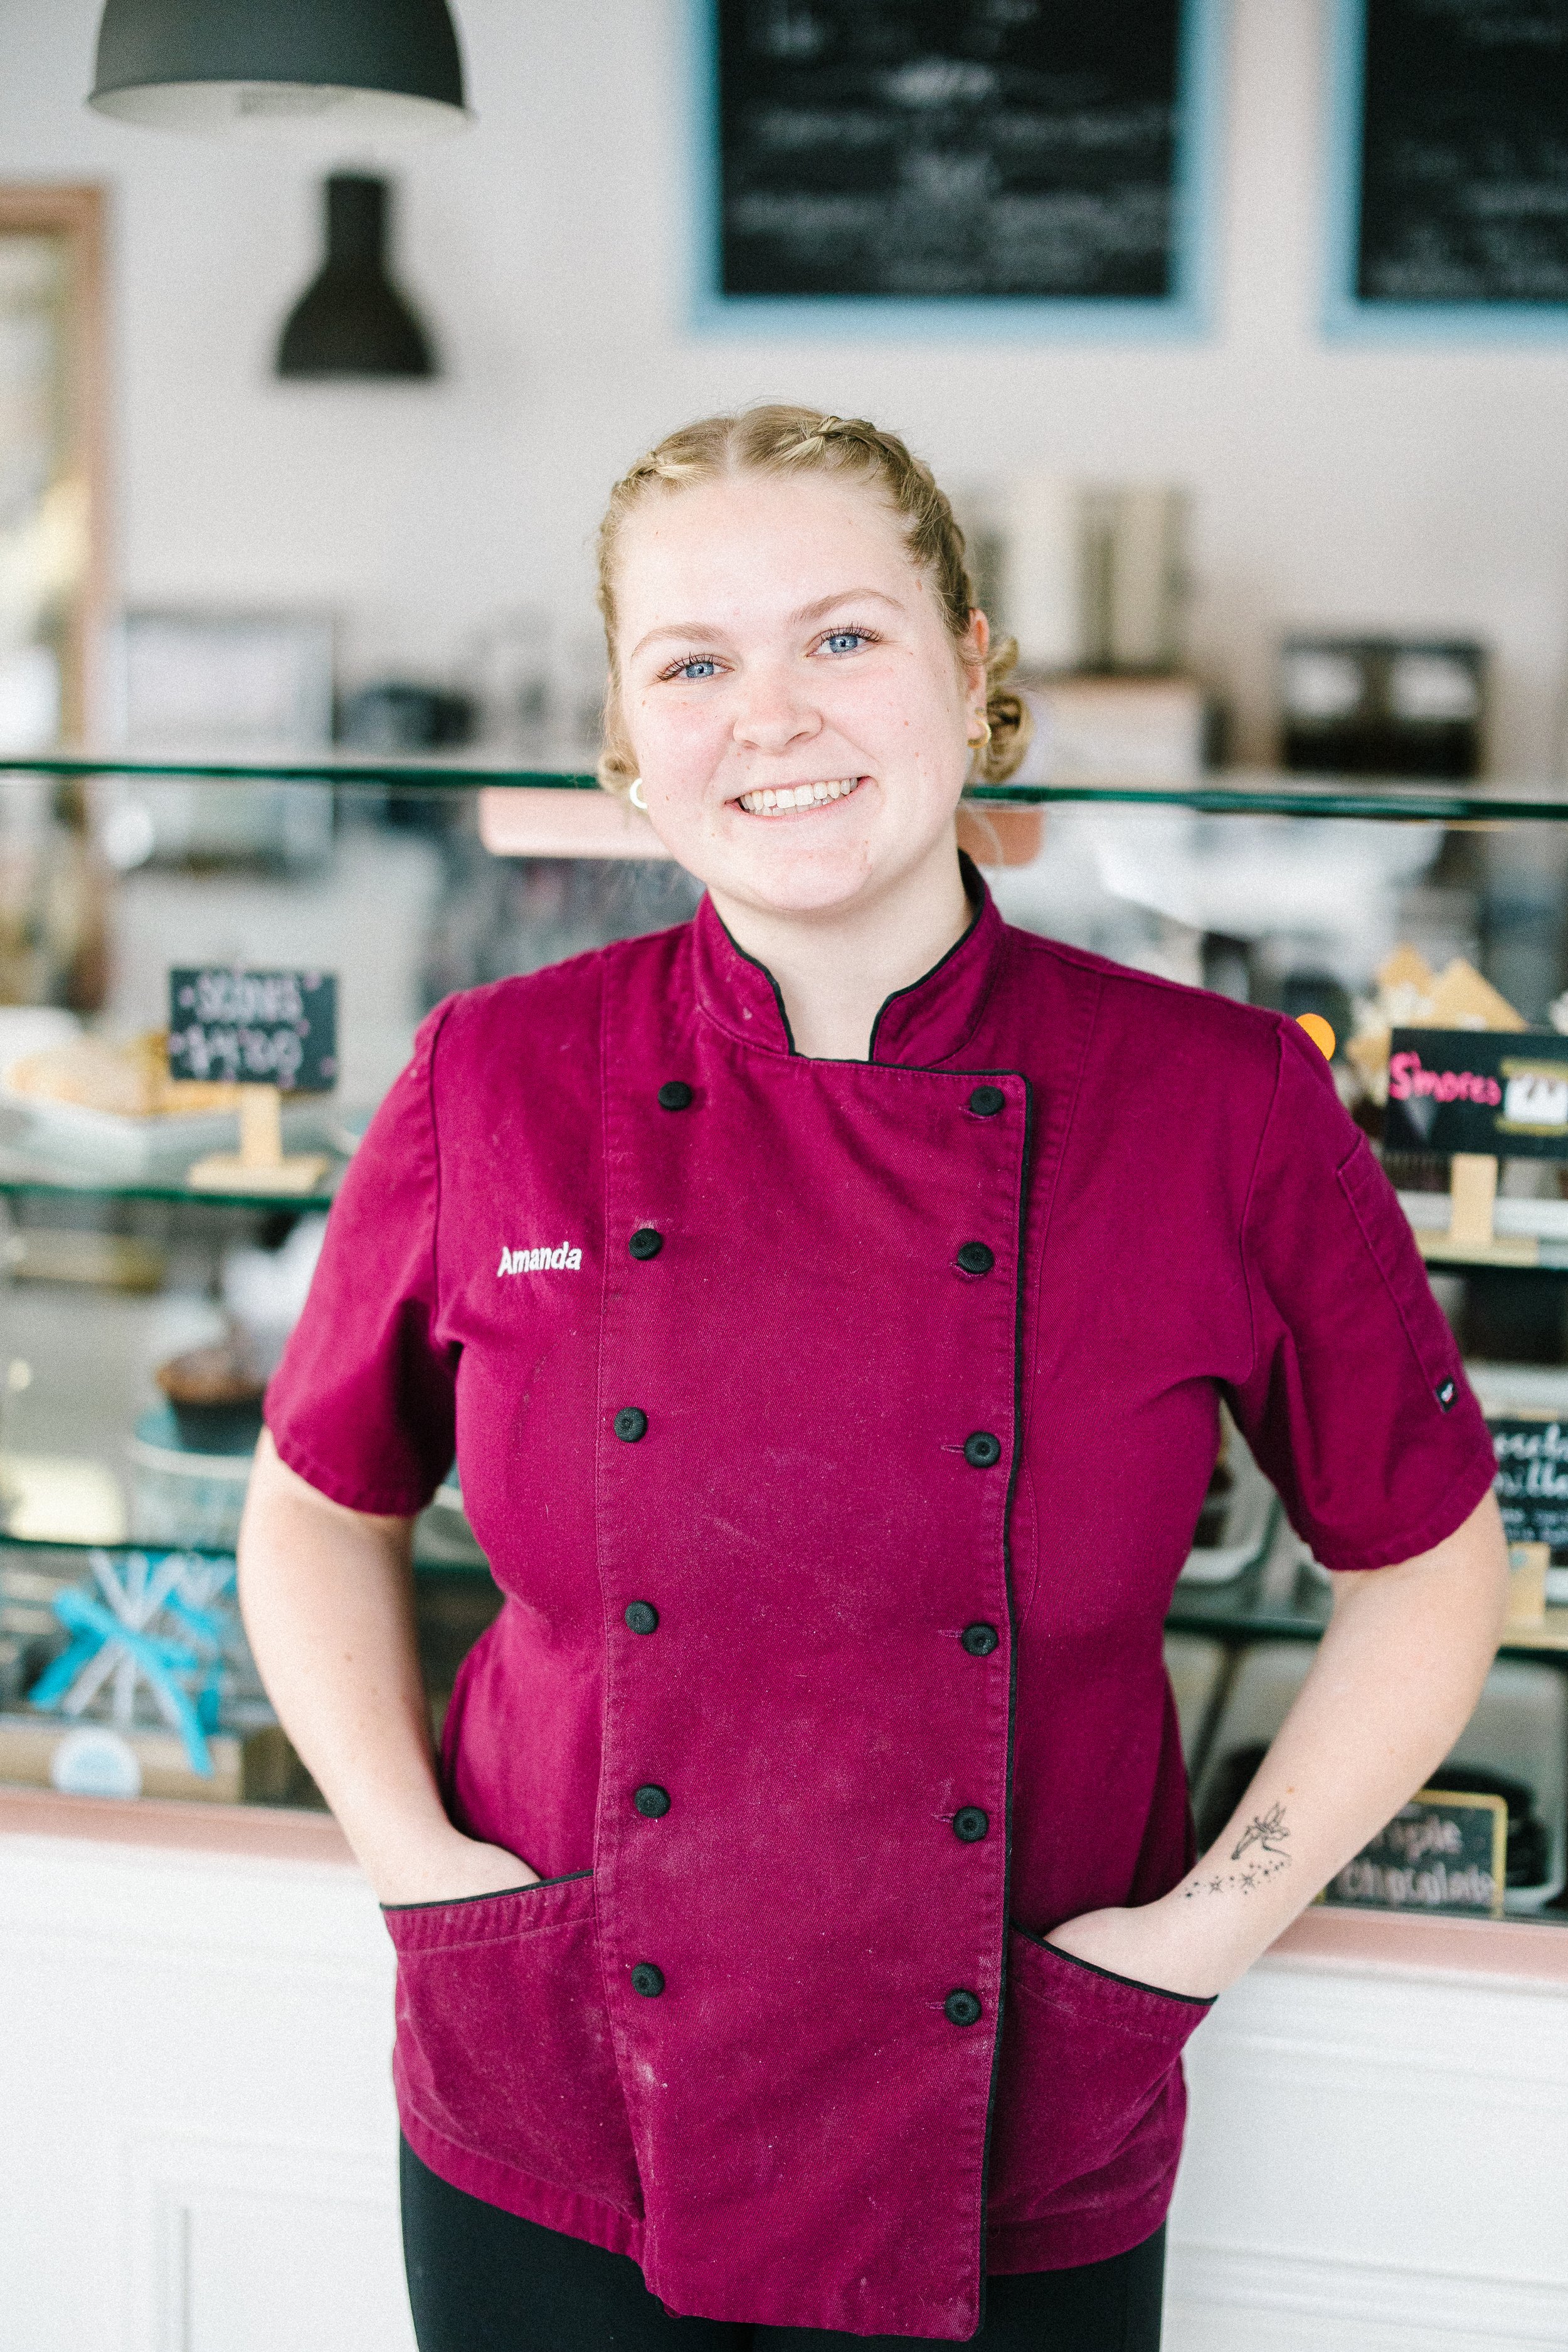 Amanda - Head Baker/Pastry Chef